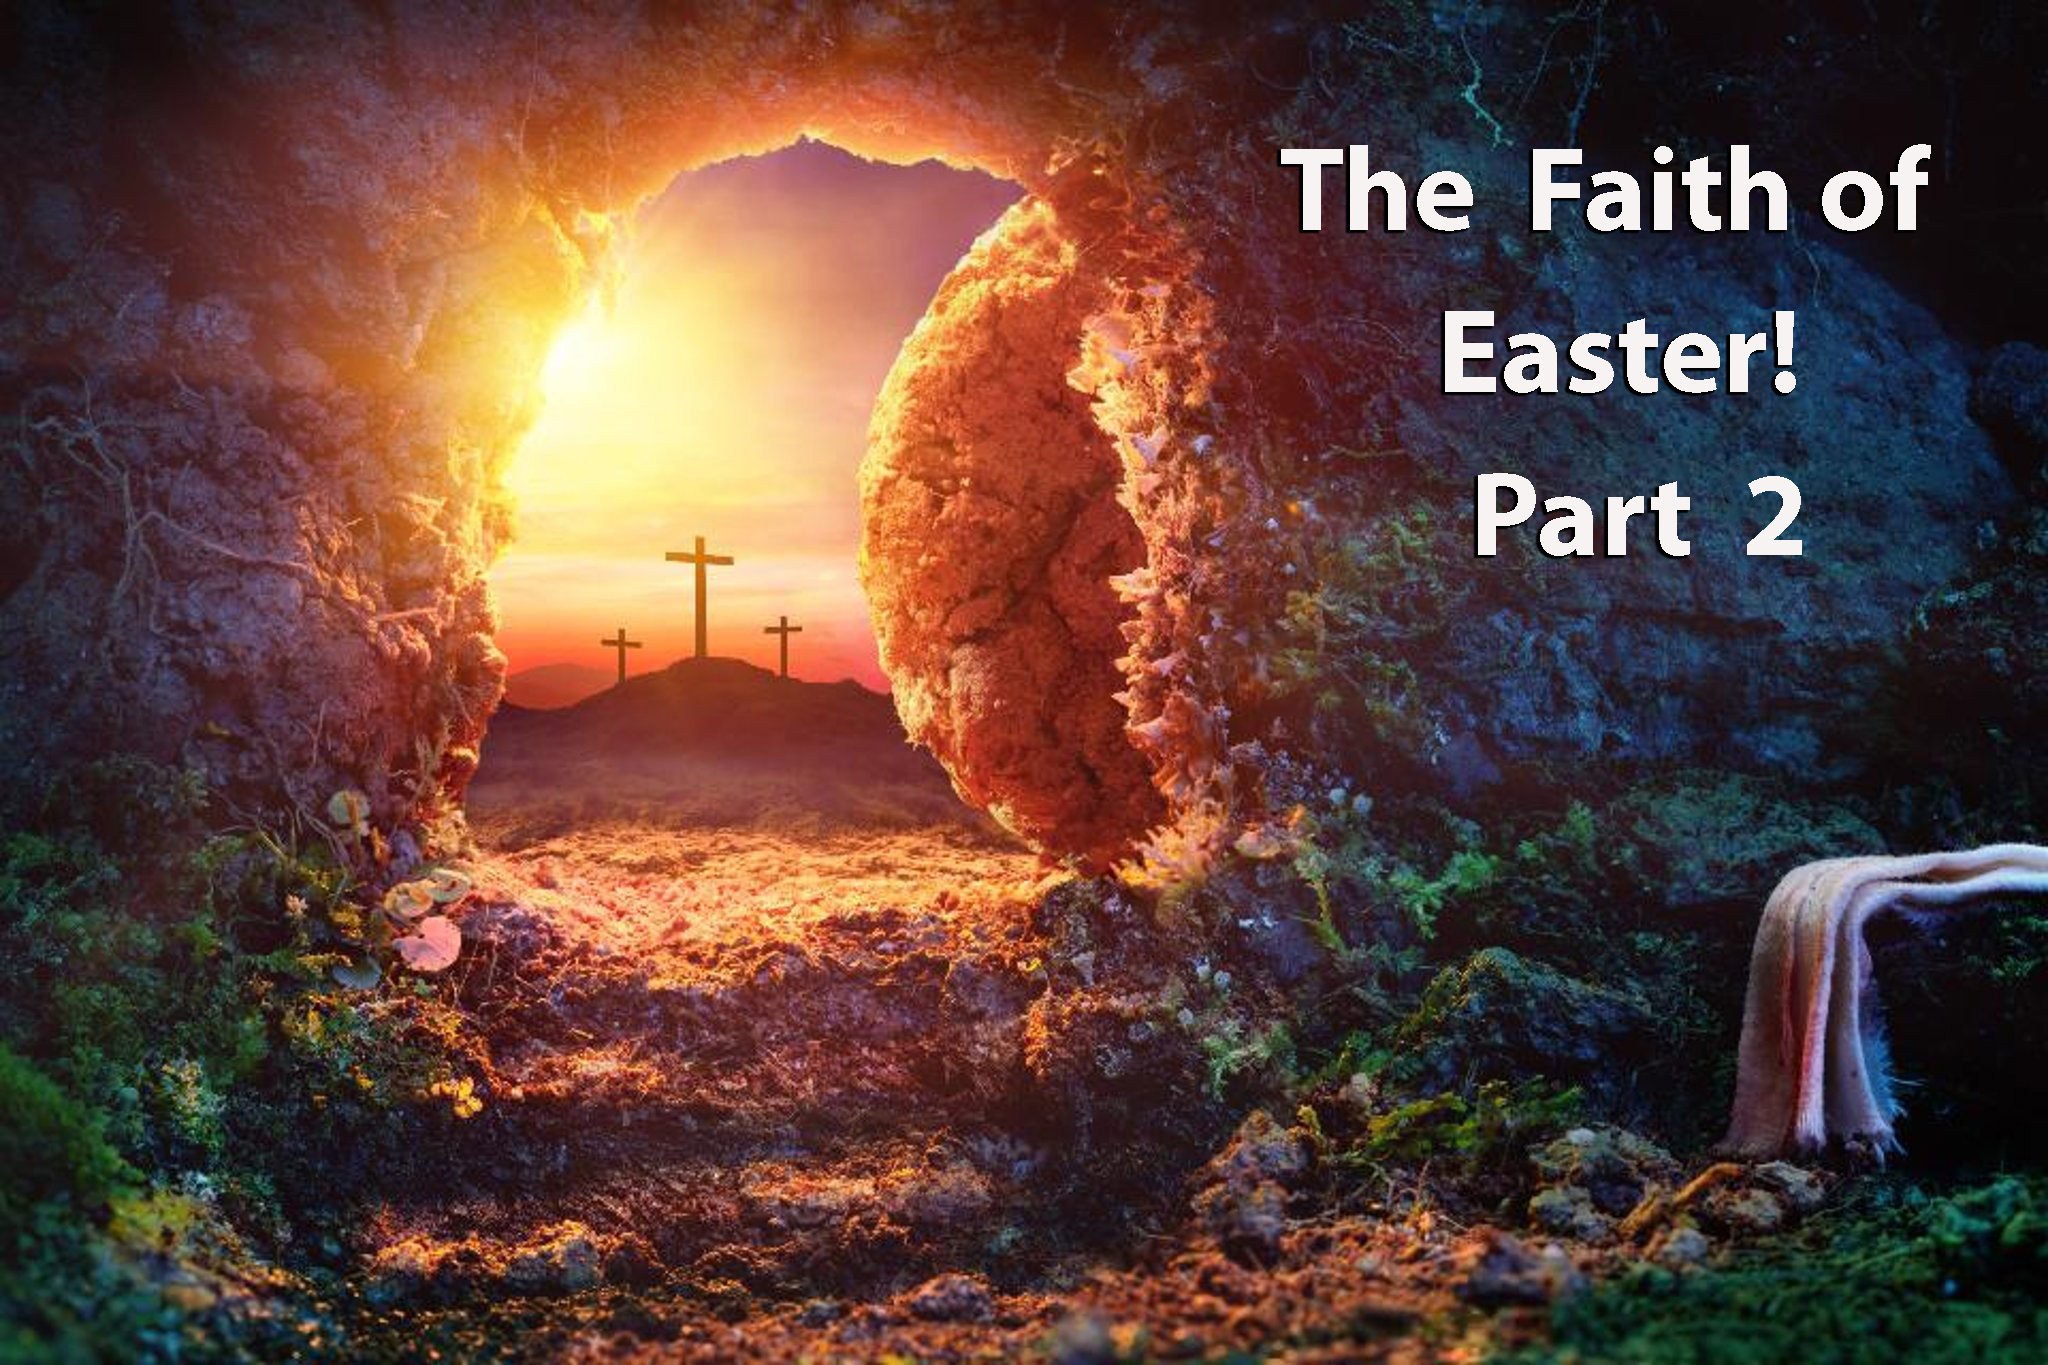 The Faith of Easter Part 2